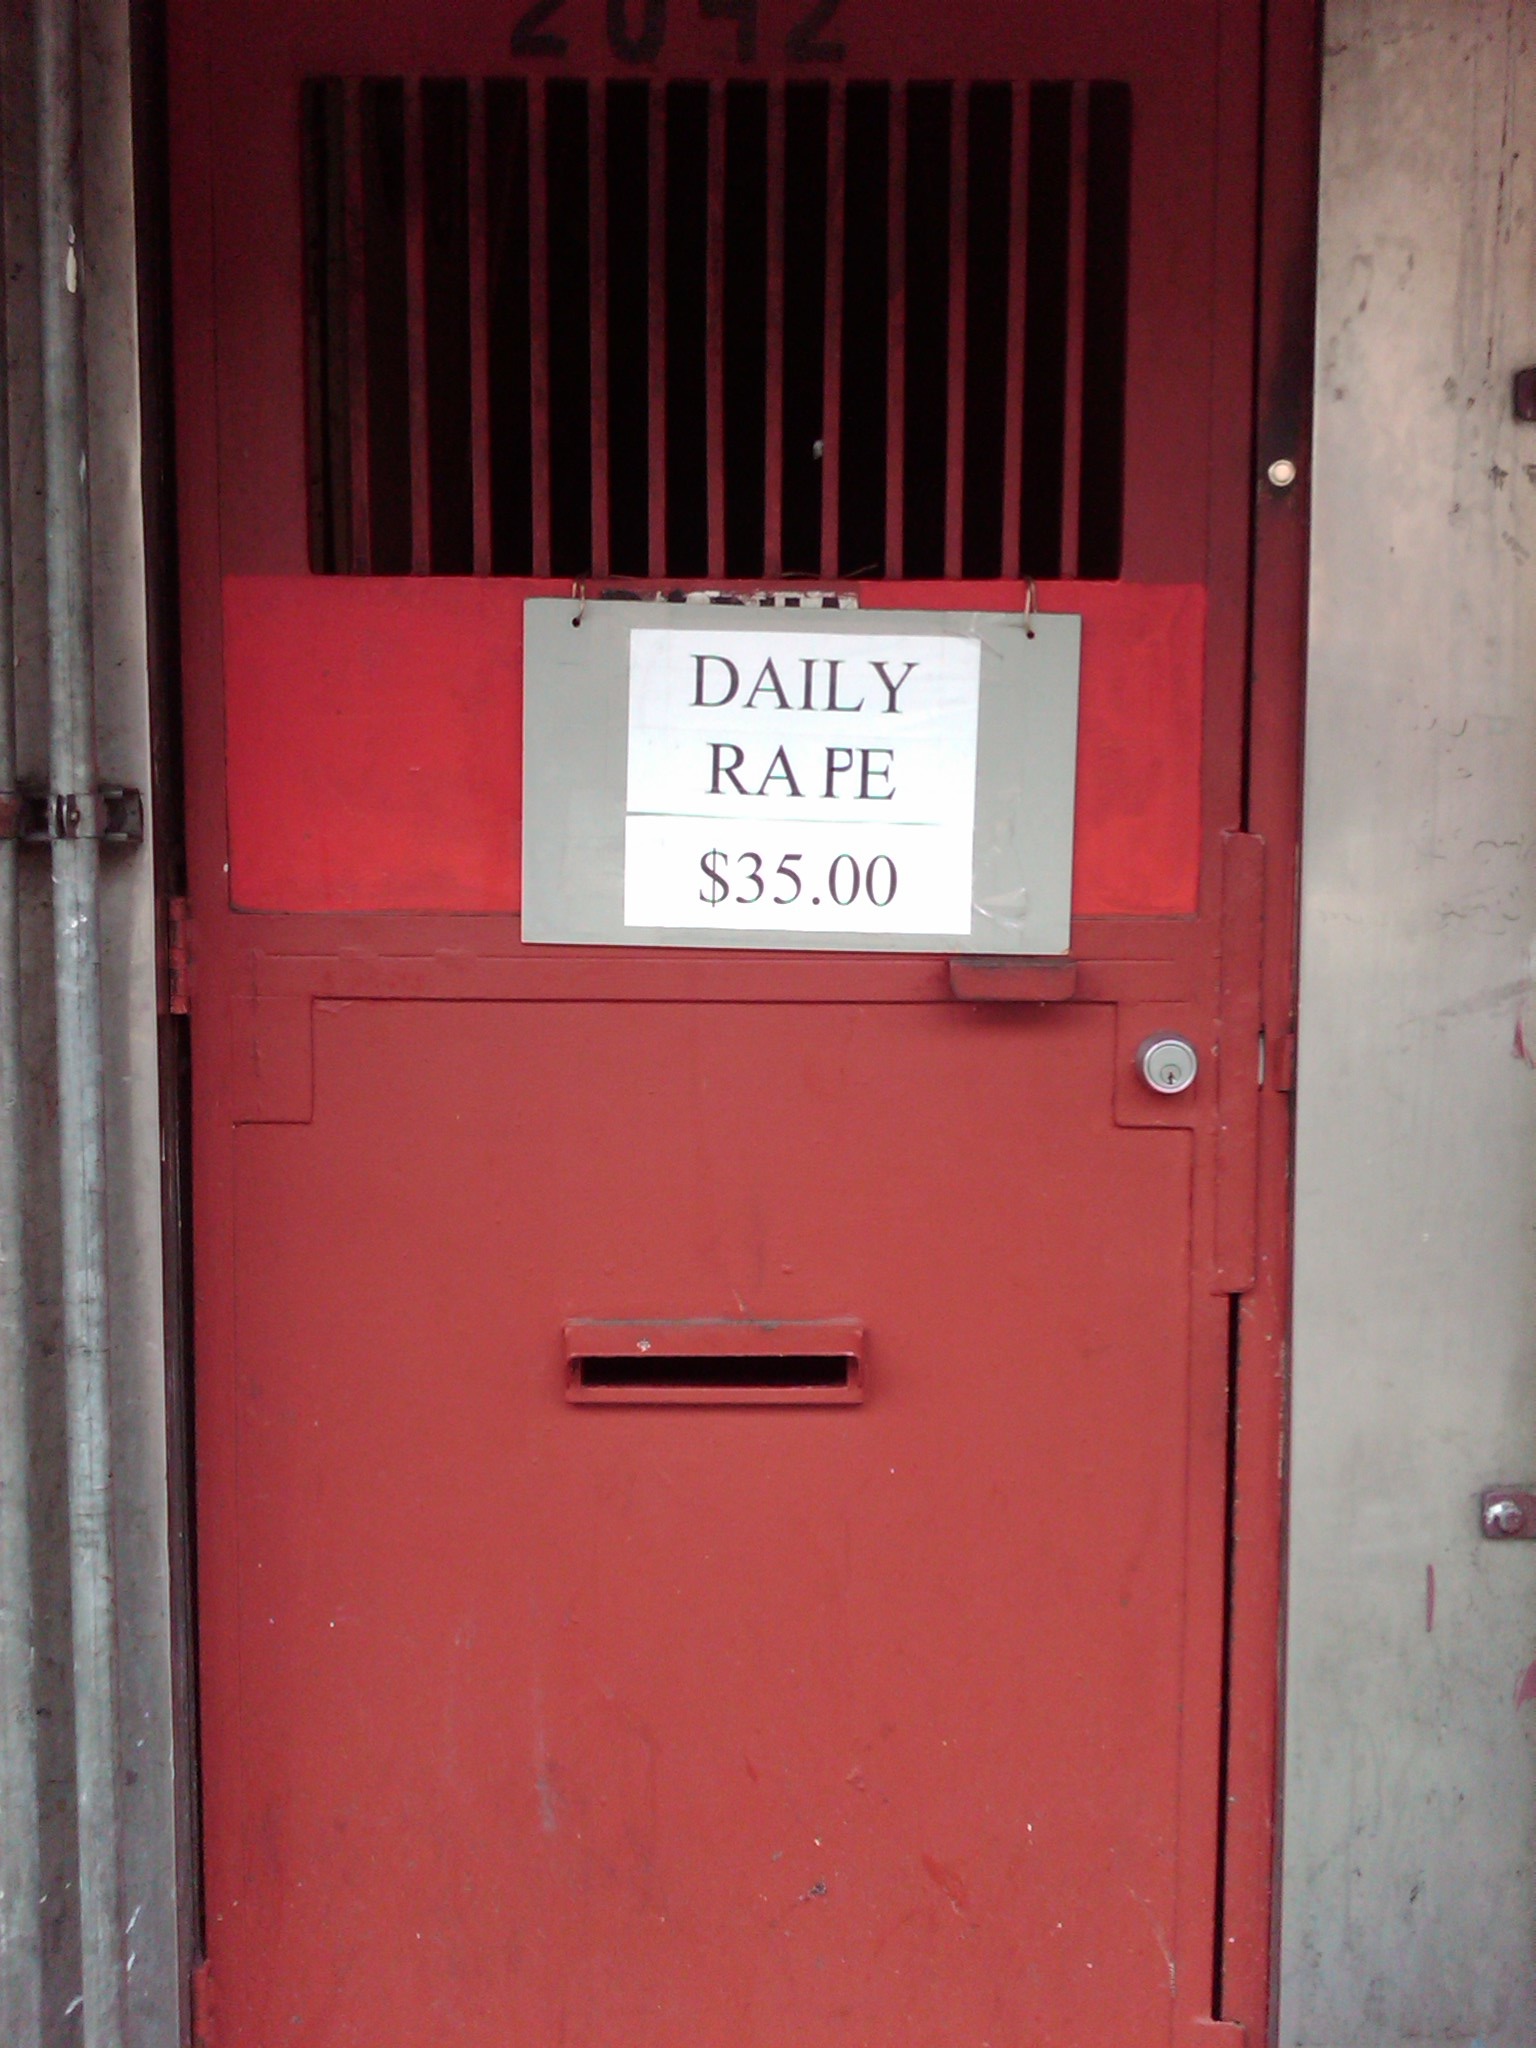 daily rape